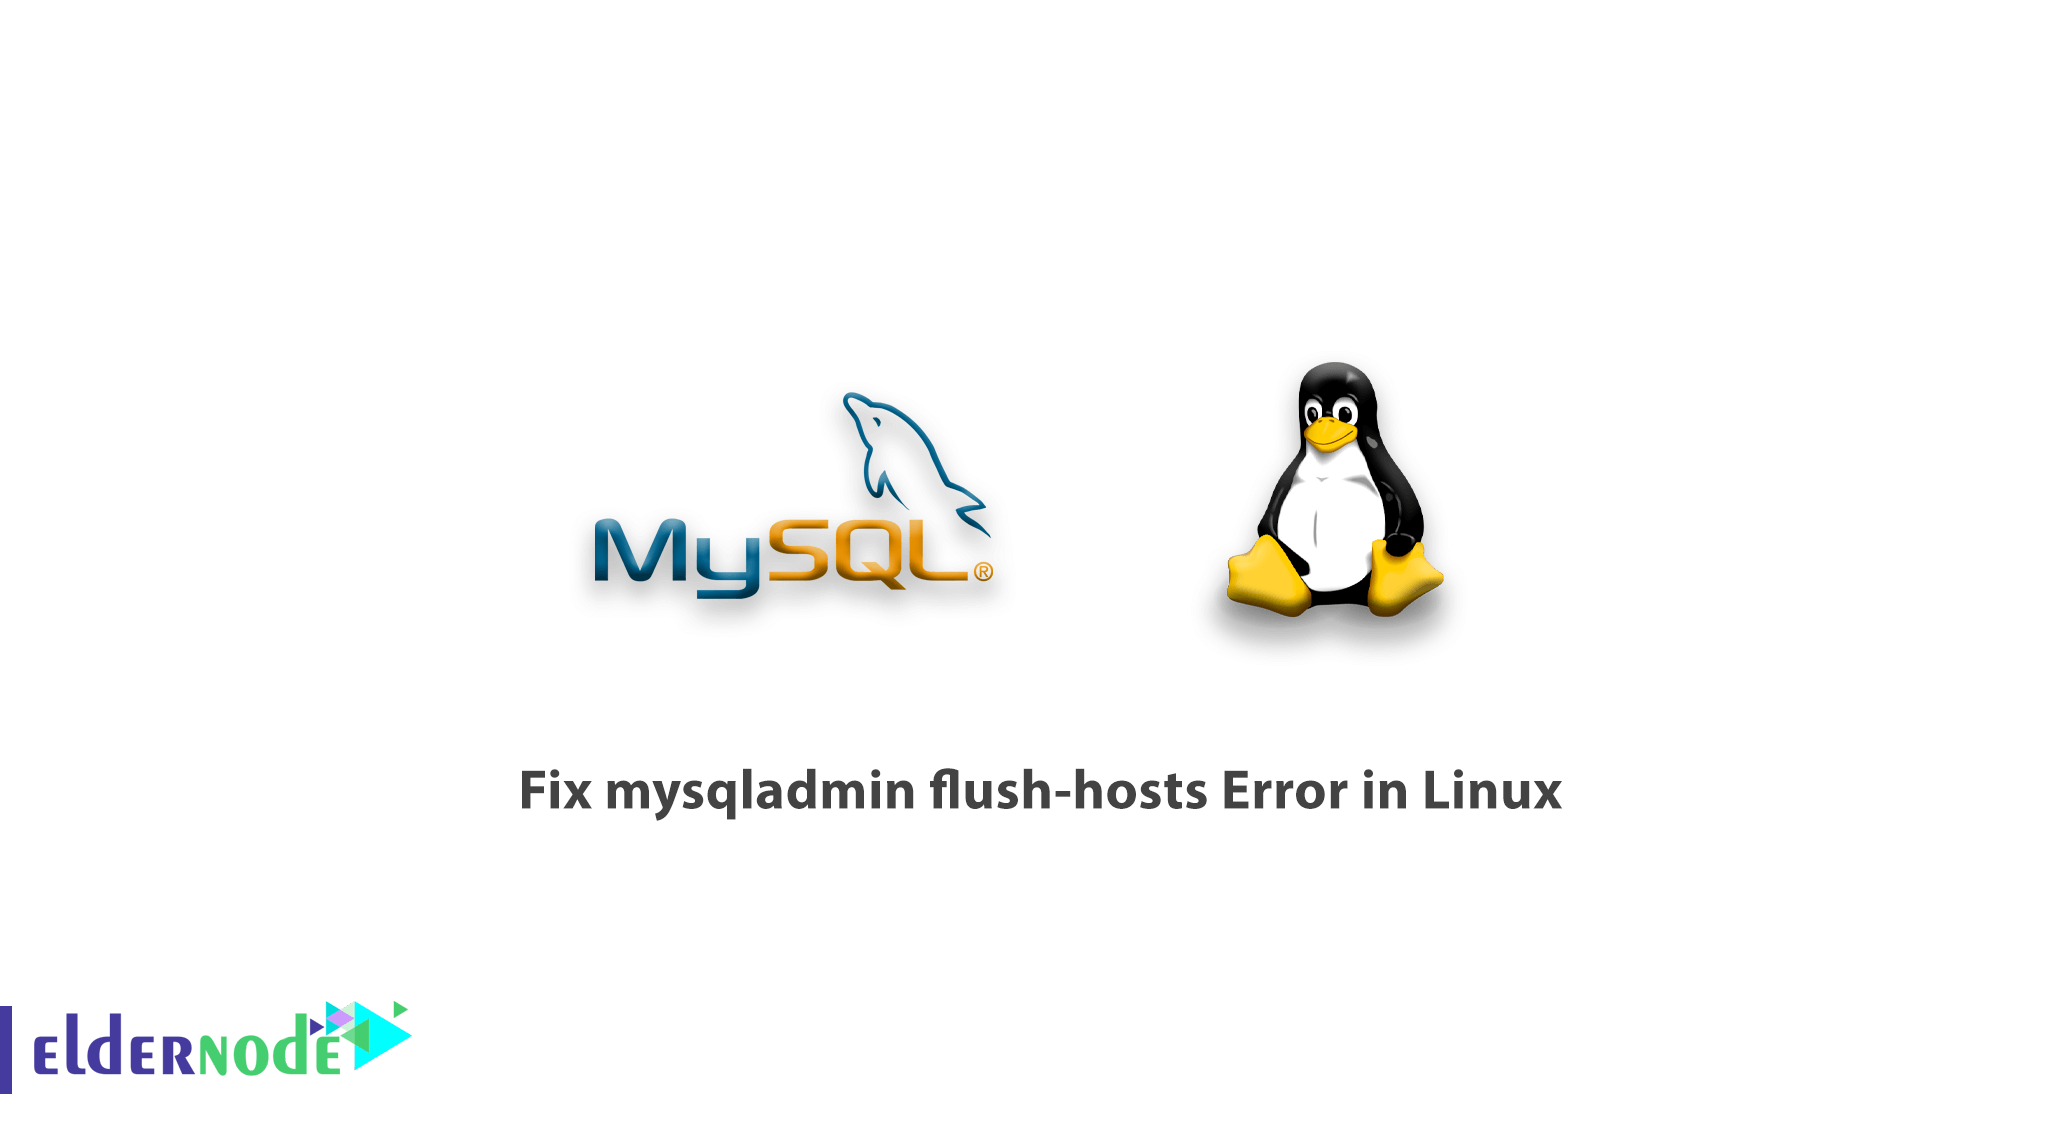 How to Fix mysqladmin flush-hosts Error in Linux